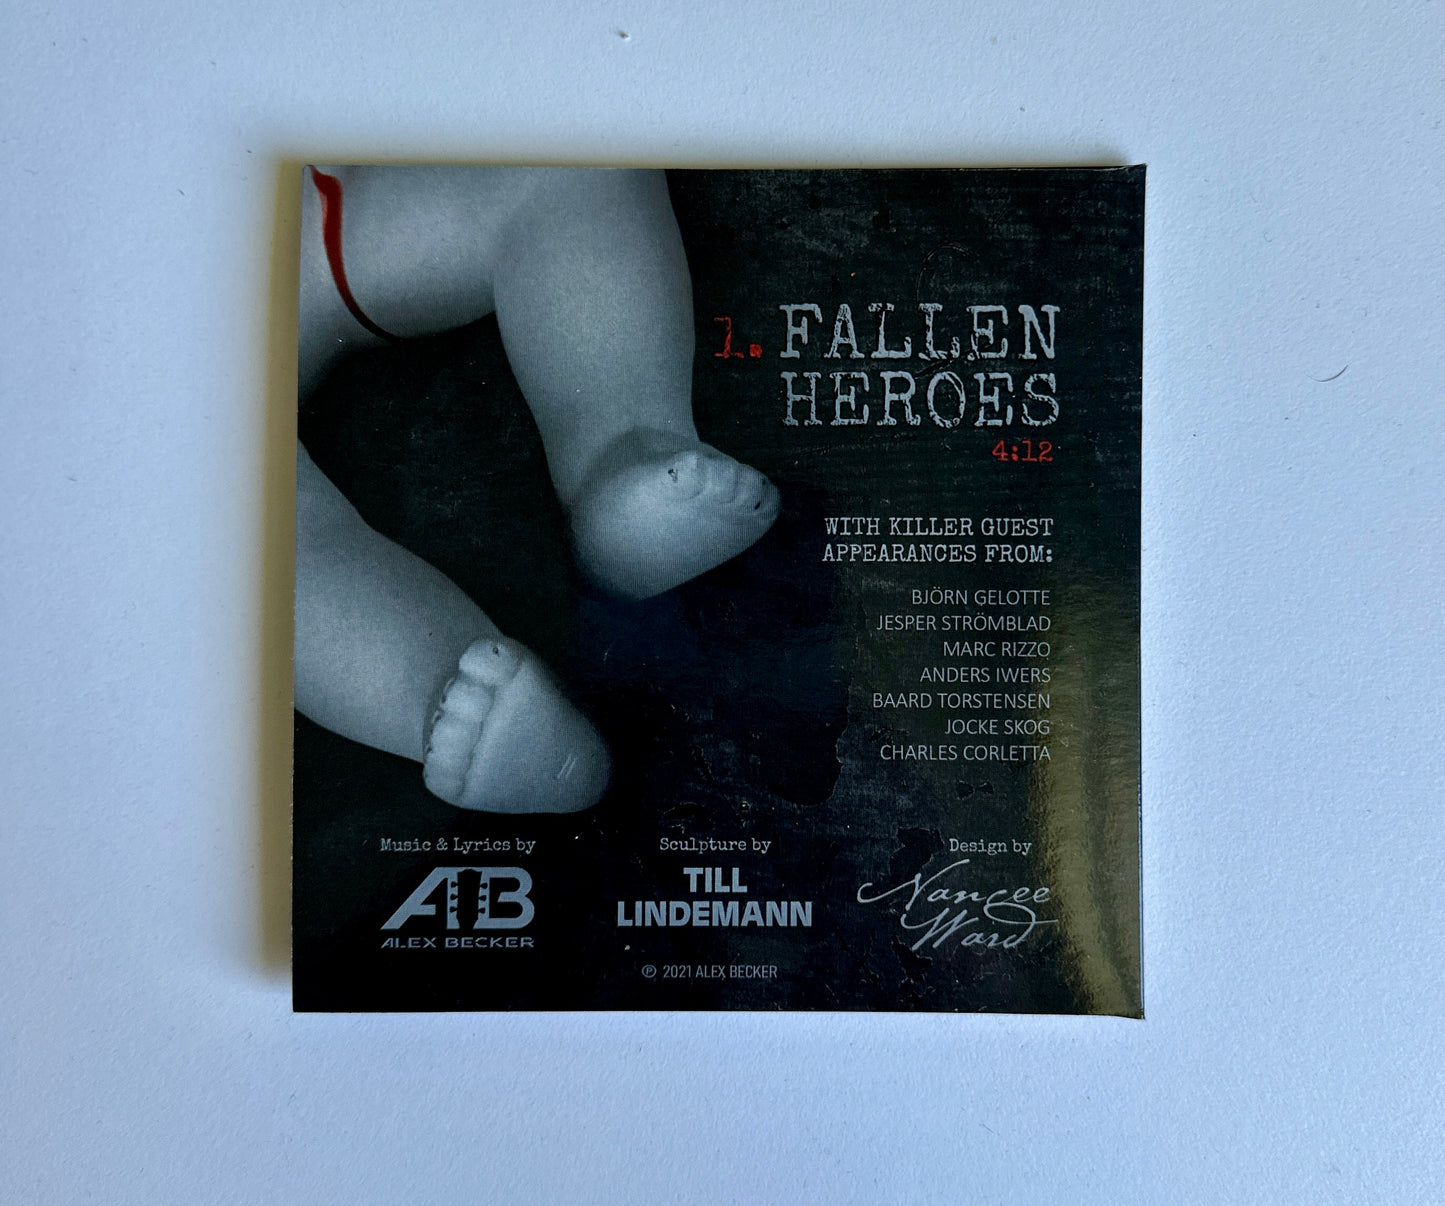 Ltd. Edition Fallen Heroes CD